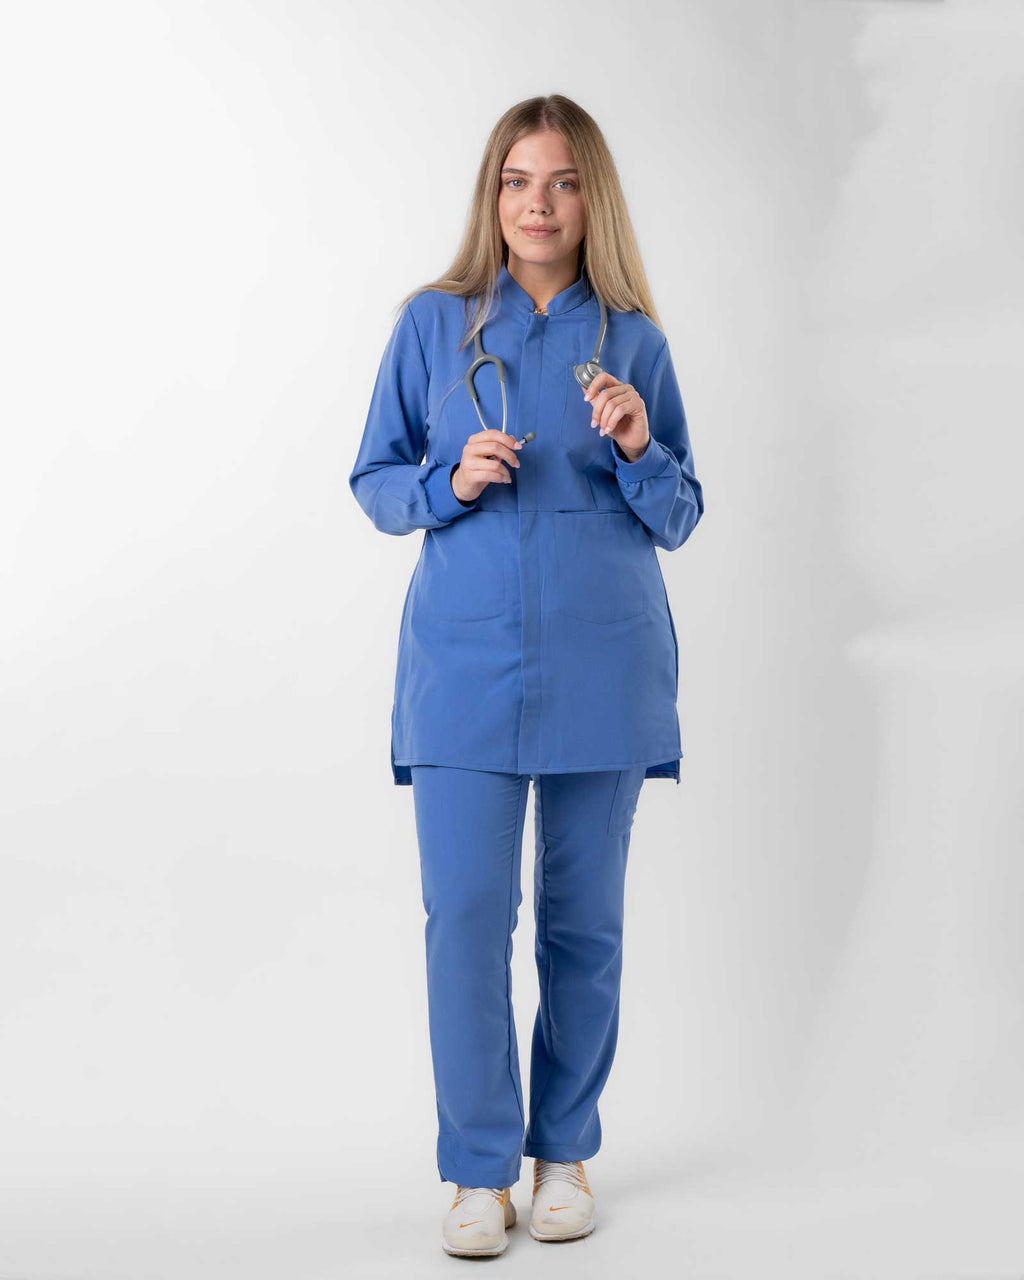 Nurse Medical Uniform High Quality